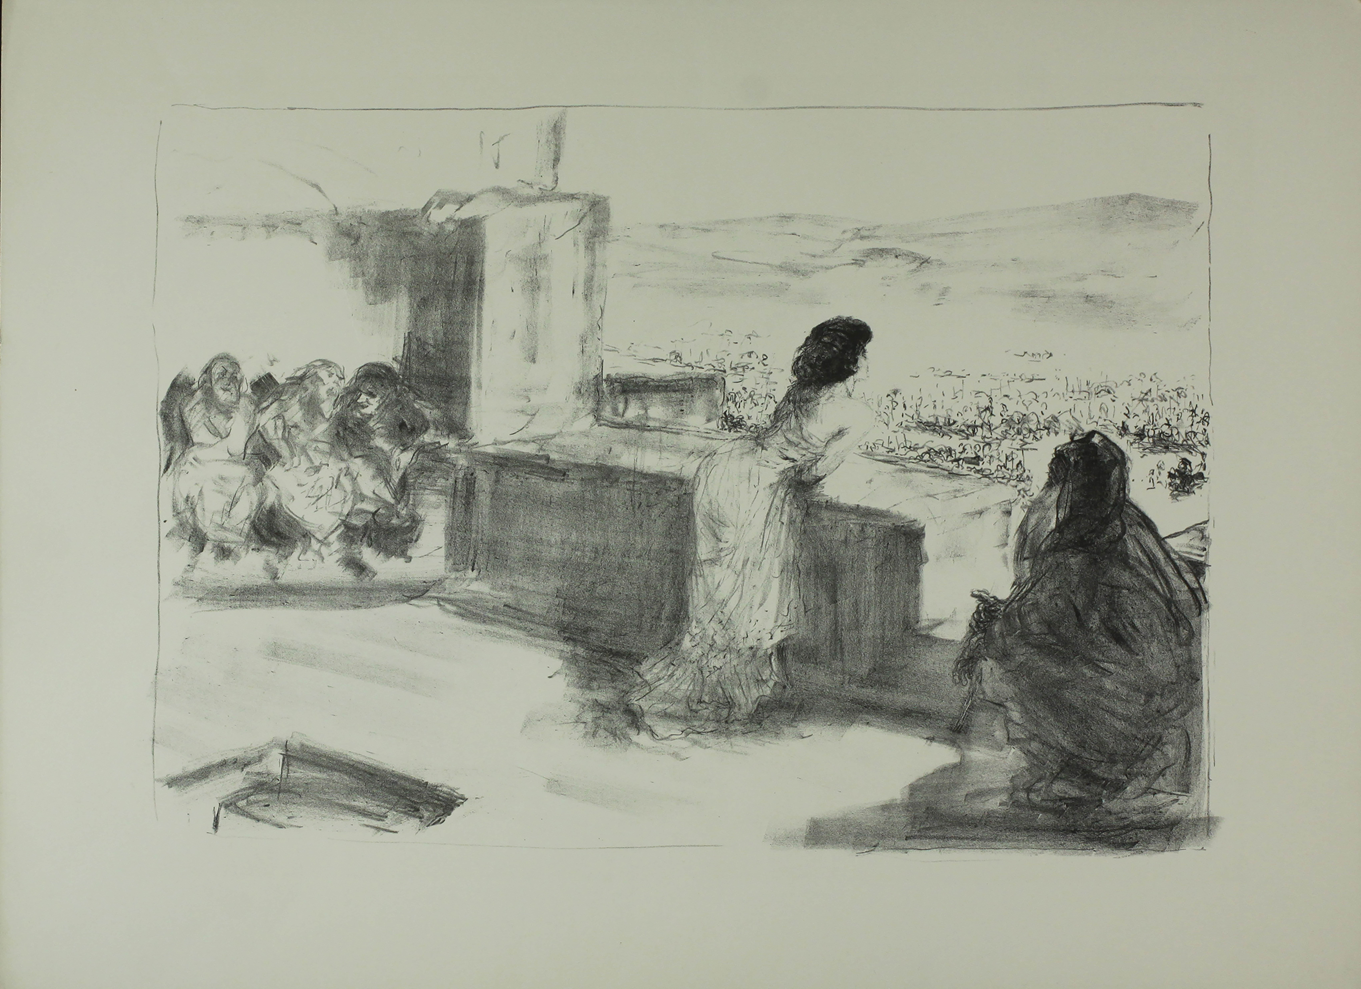 Max Slevogt, Helena na tarasie przy bramie Skajskiej, ilustracja do Iliady Homera, litografia, 1907